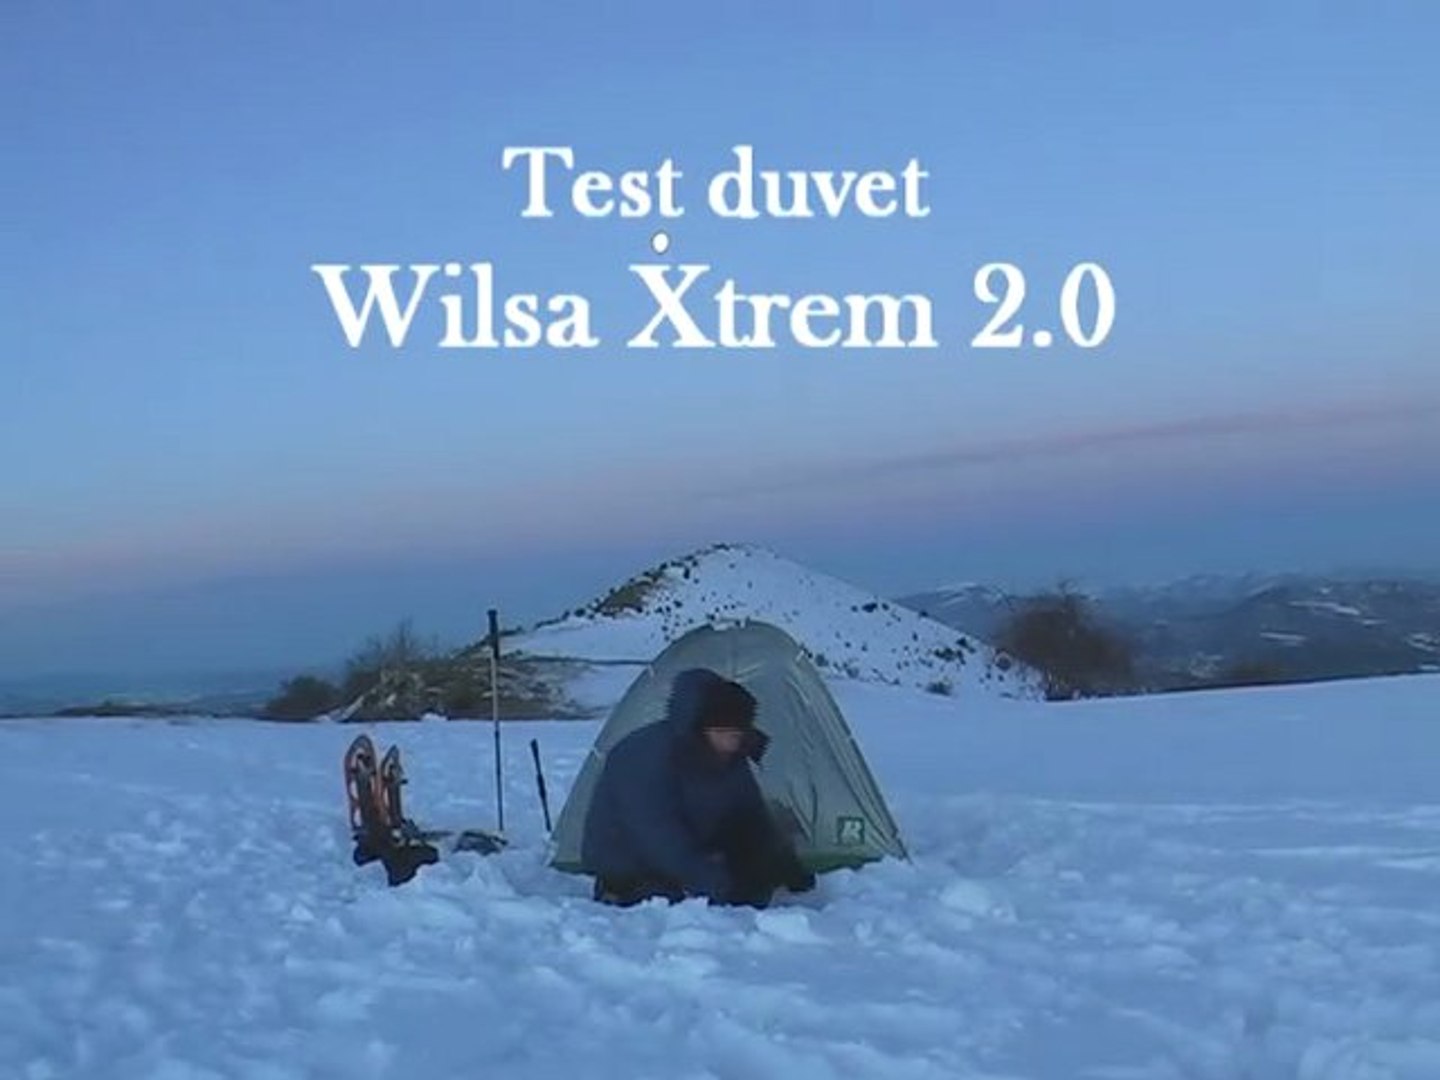 Test duvet Wilsa xtrem 2.0 - Vidéo Dailymotion